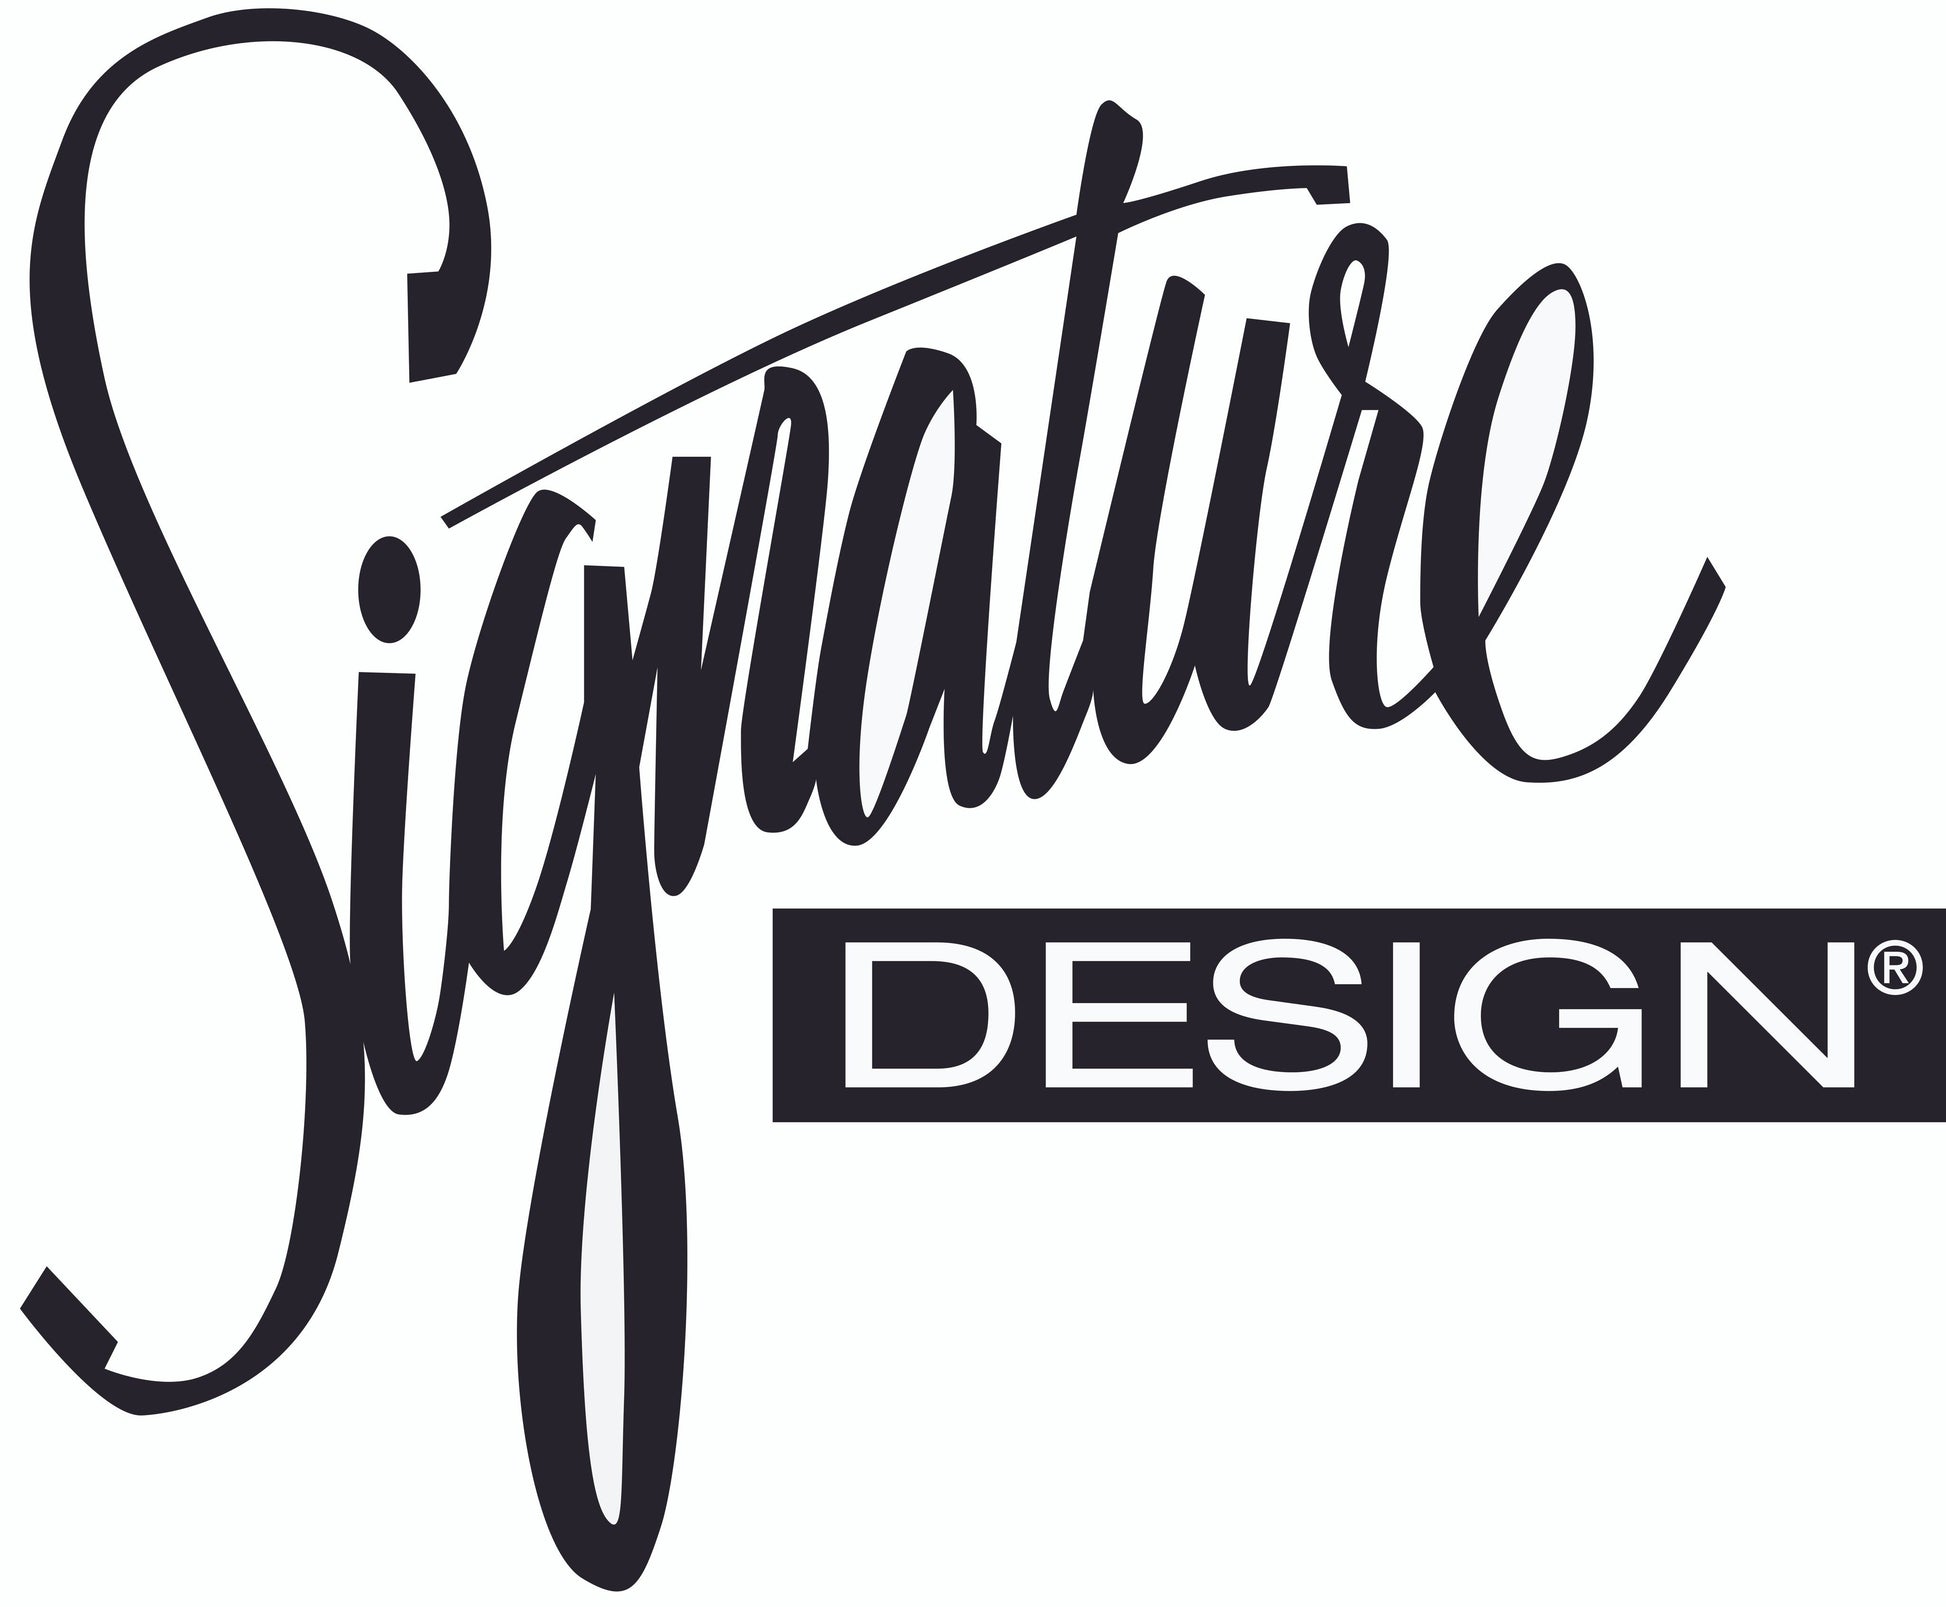 Balintmore Accent Mirror Signature Design by Ashley®